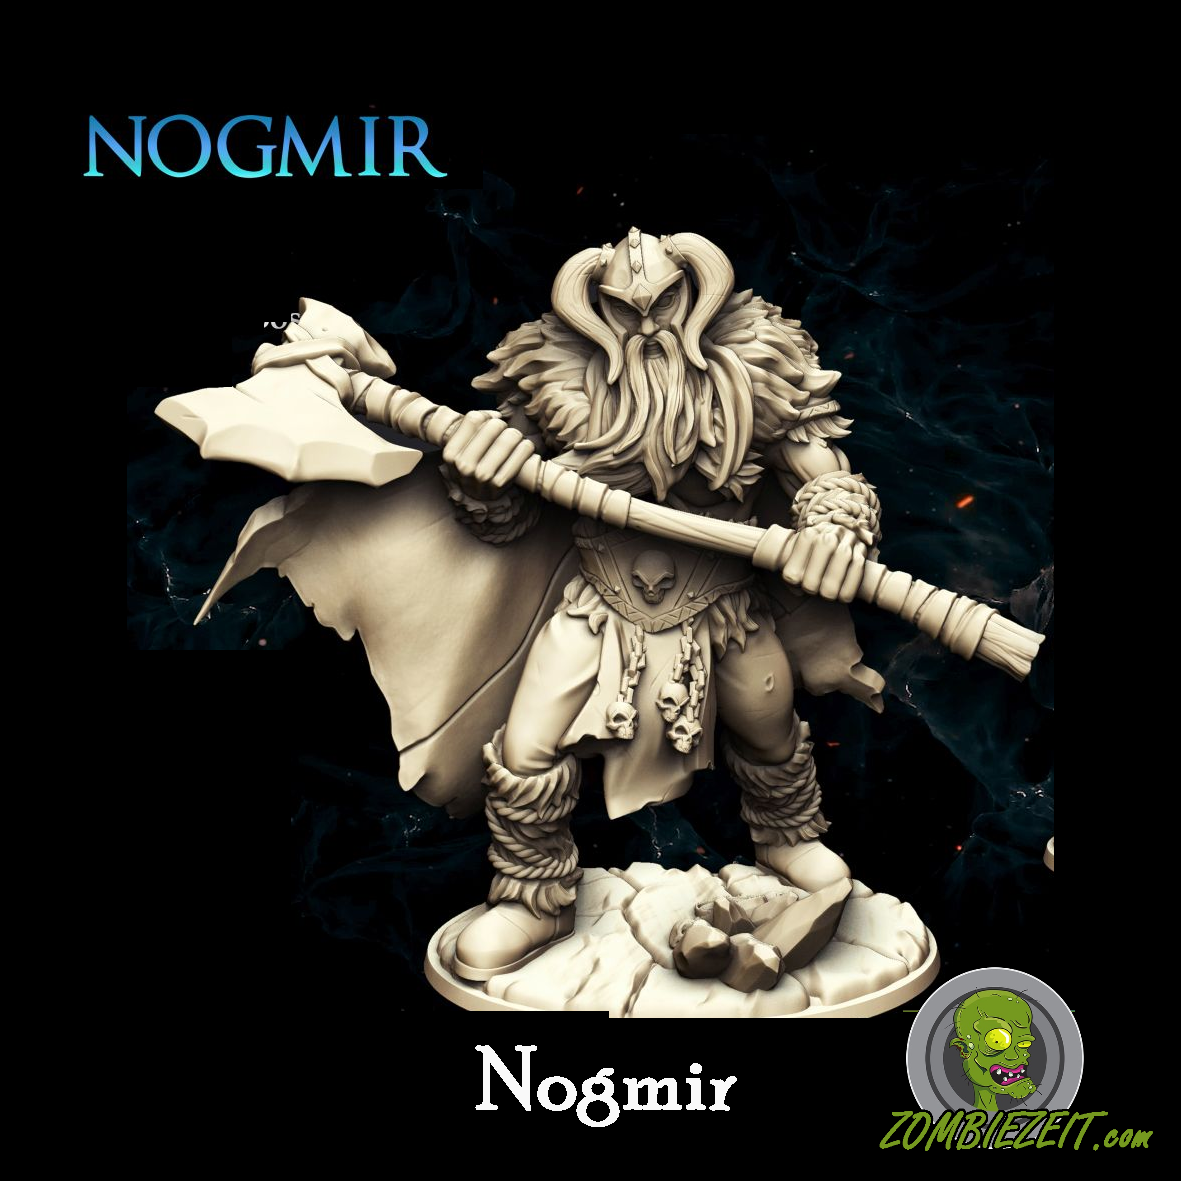 Giant Nogmir